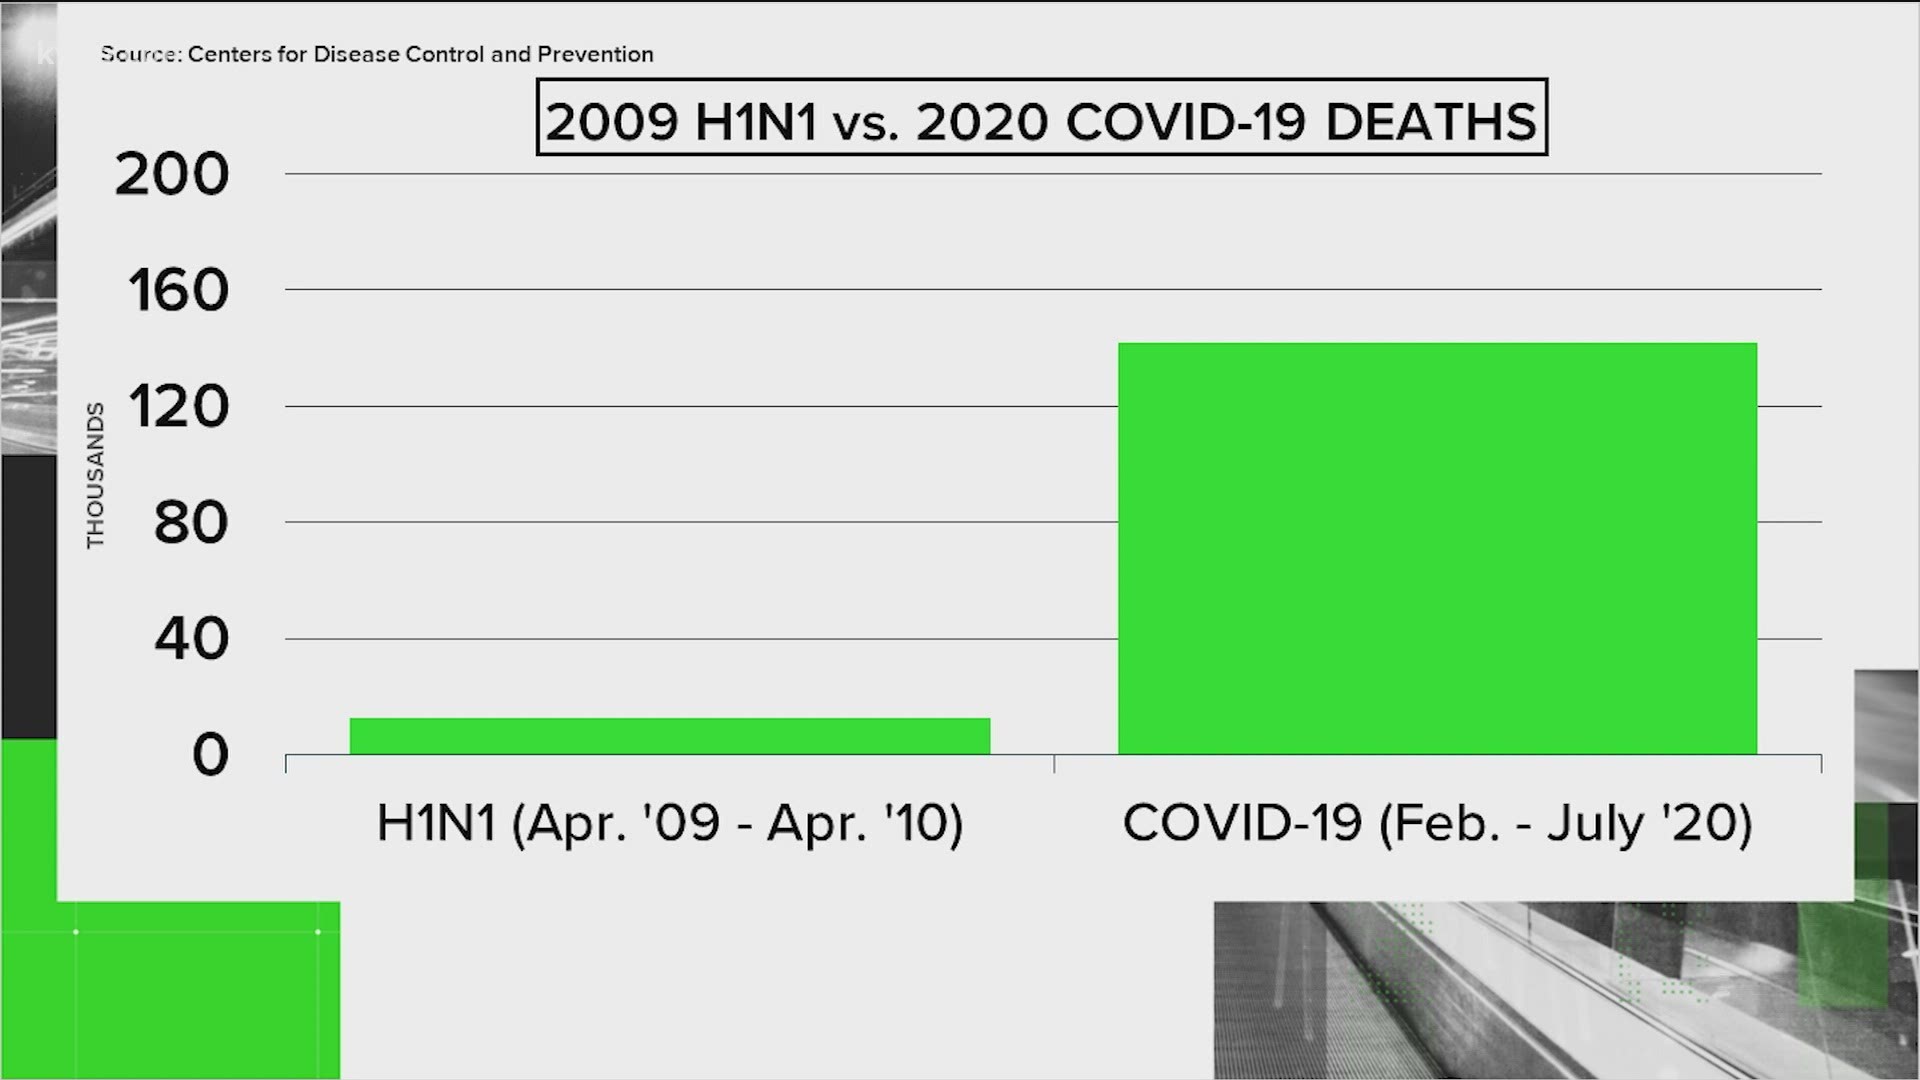 COVID-19 is already far more deadly.